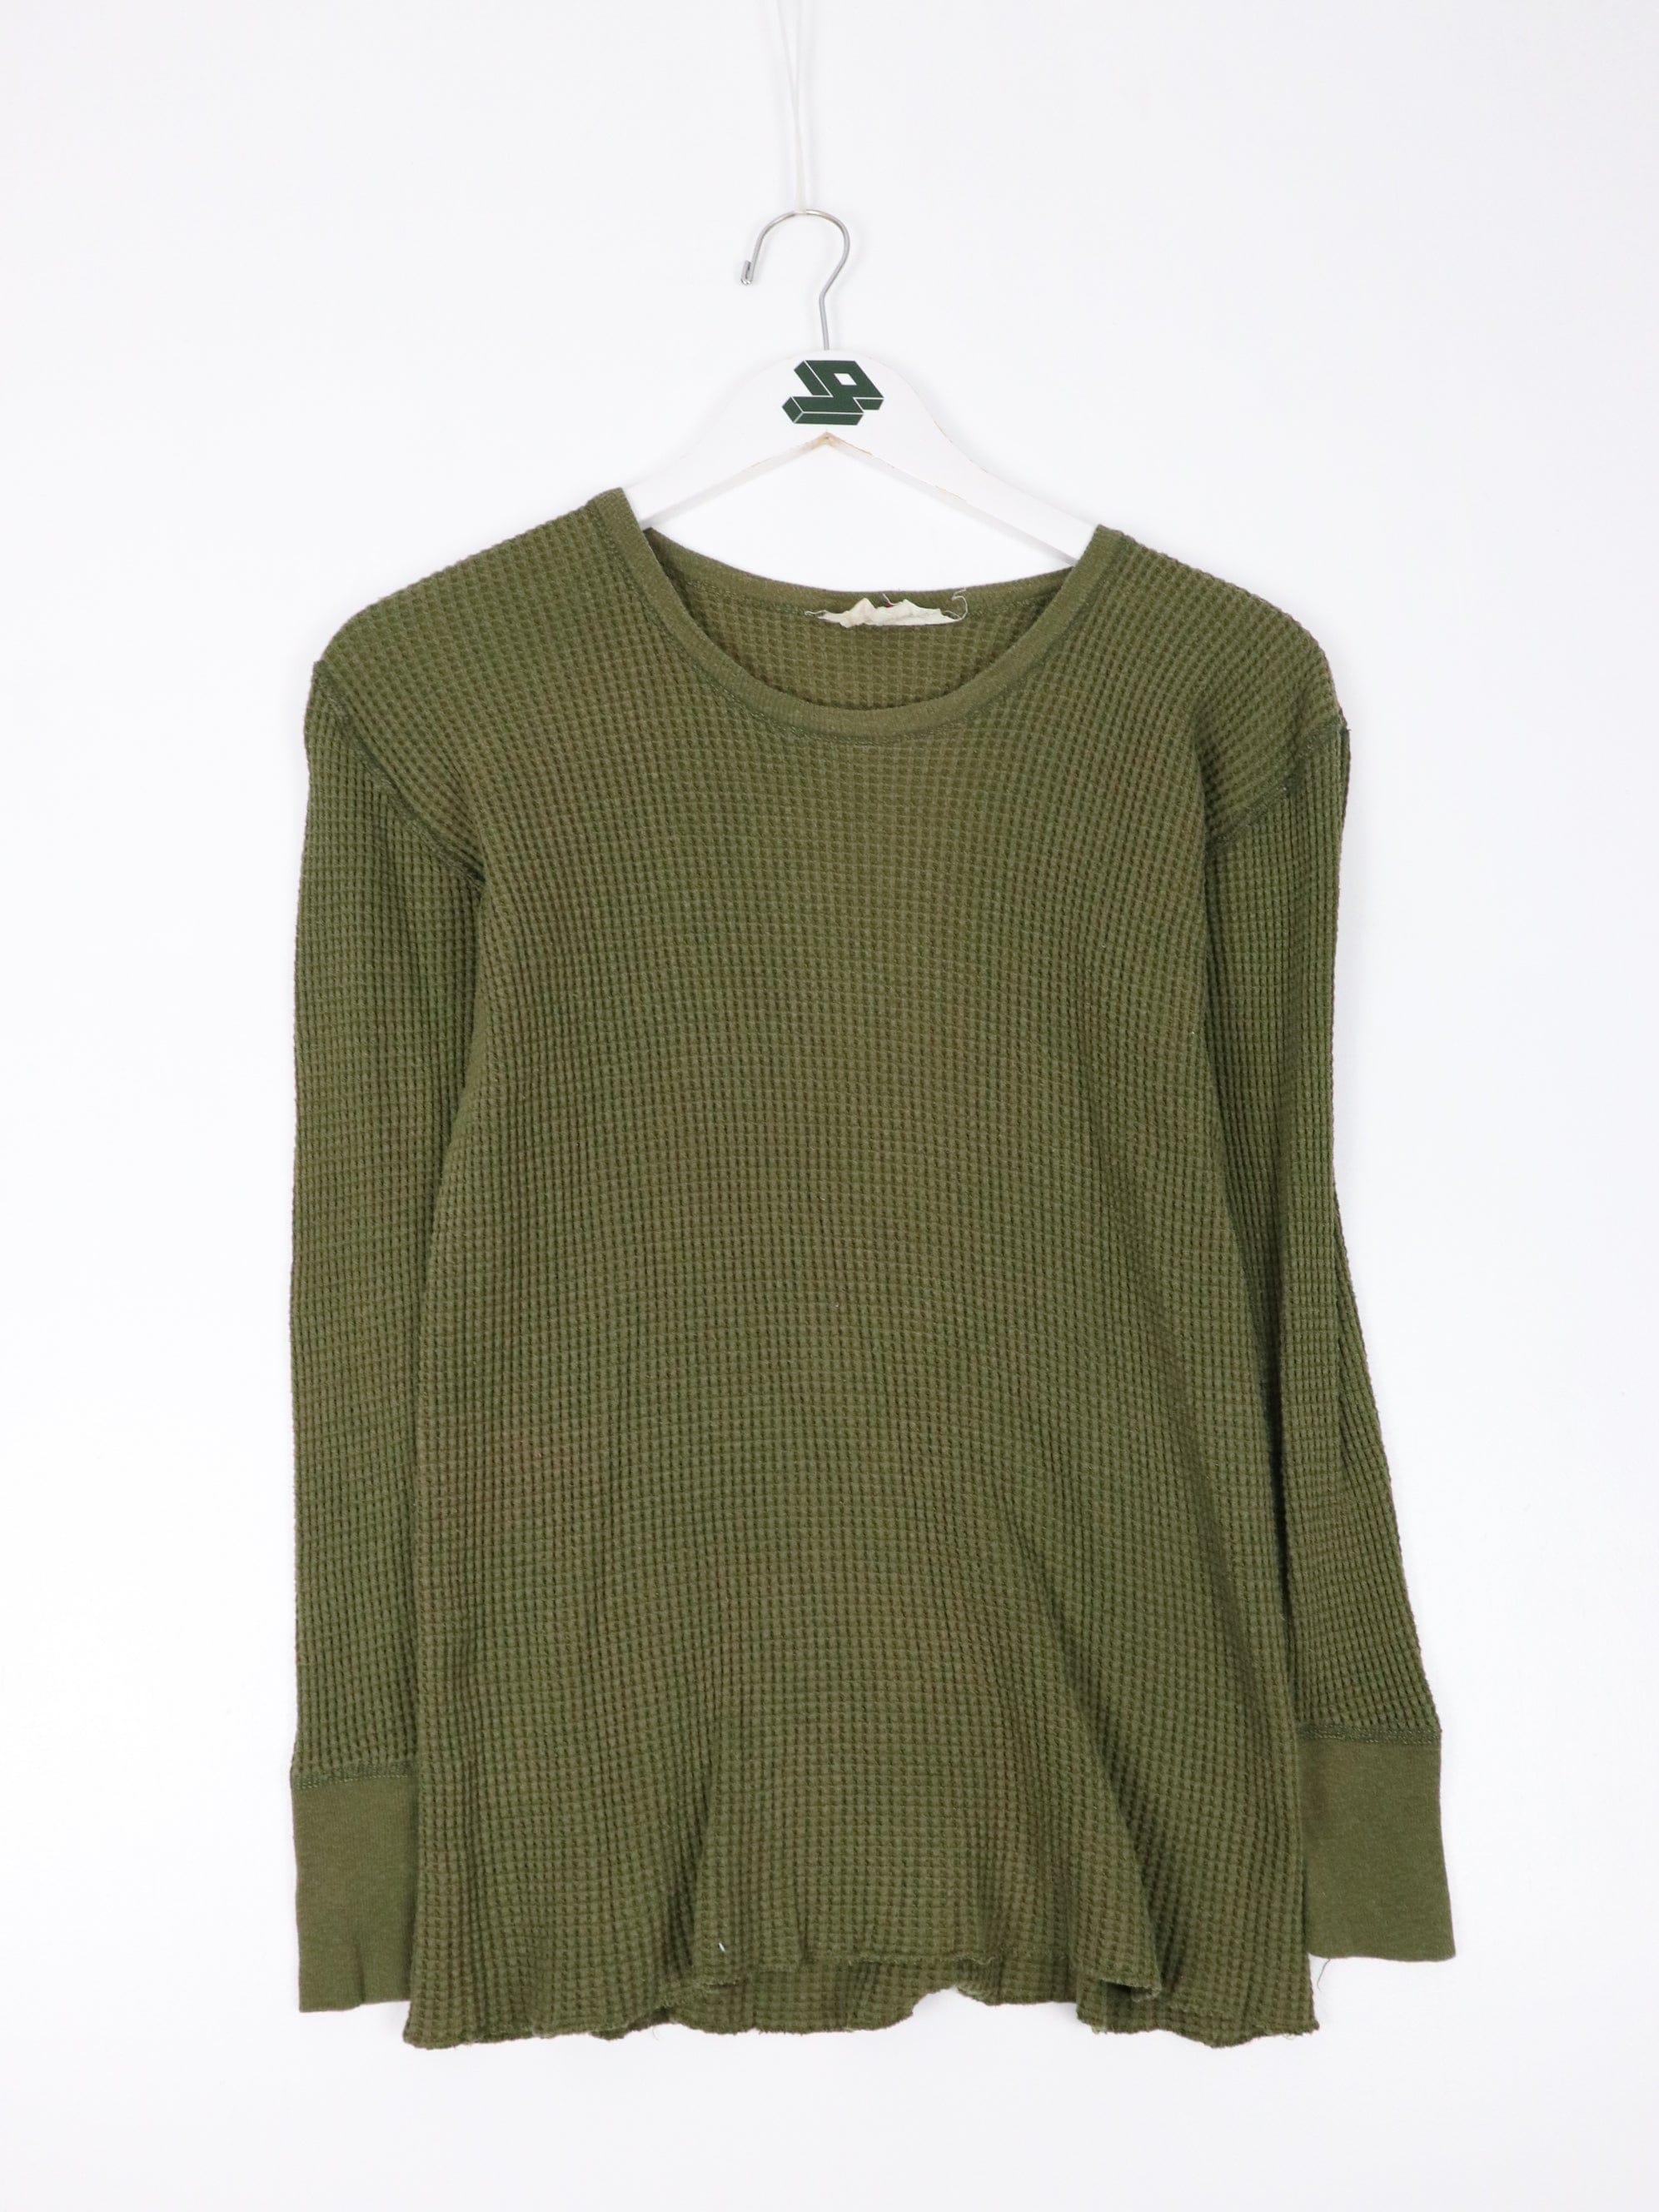 Vintage Penmens Shirt Womens Small Green Thermal Army Undershirt